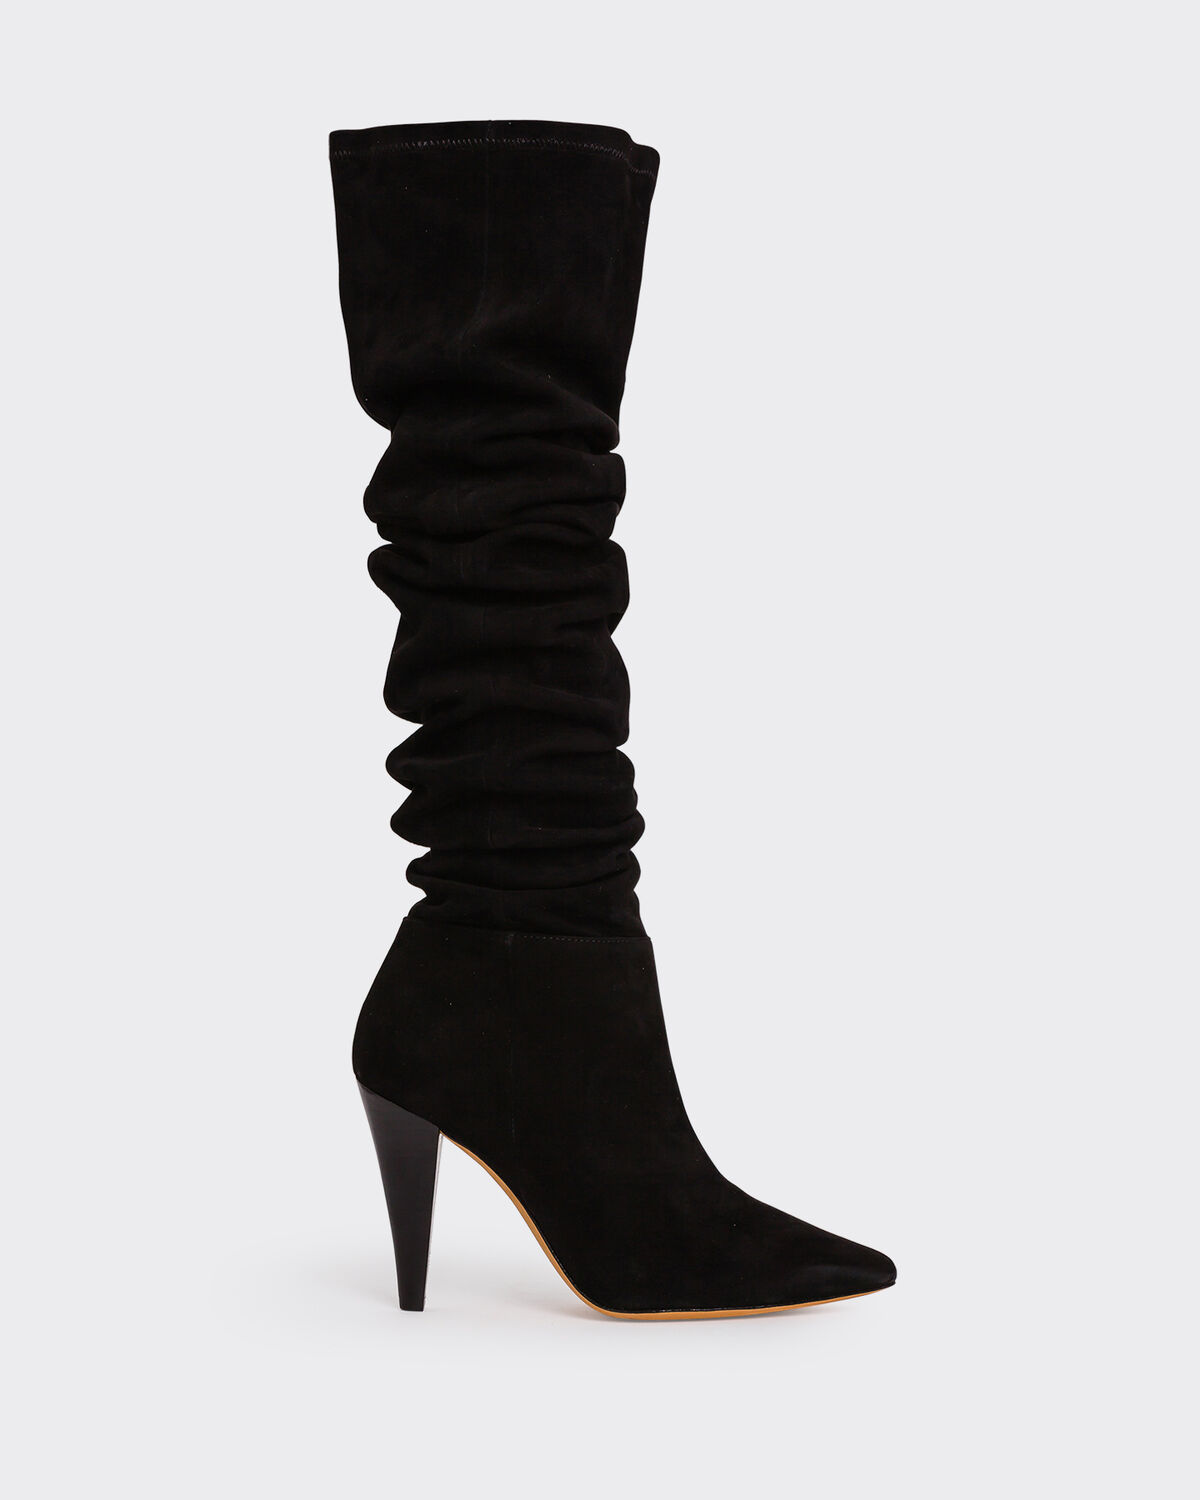 Louisea Boots Black by IRO Paris